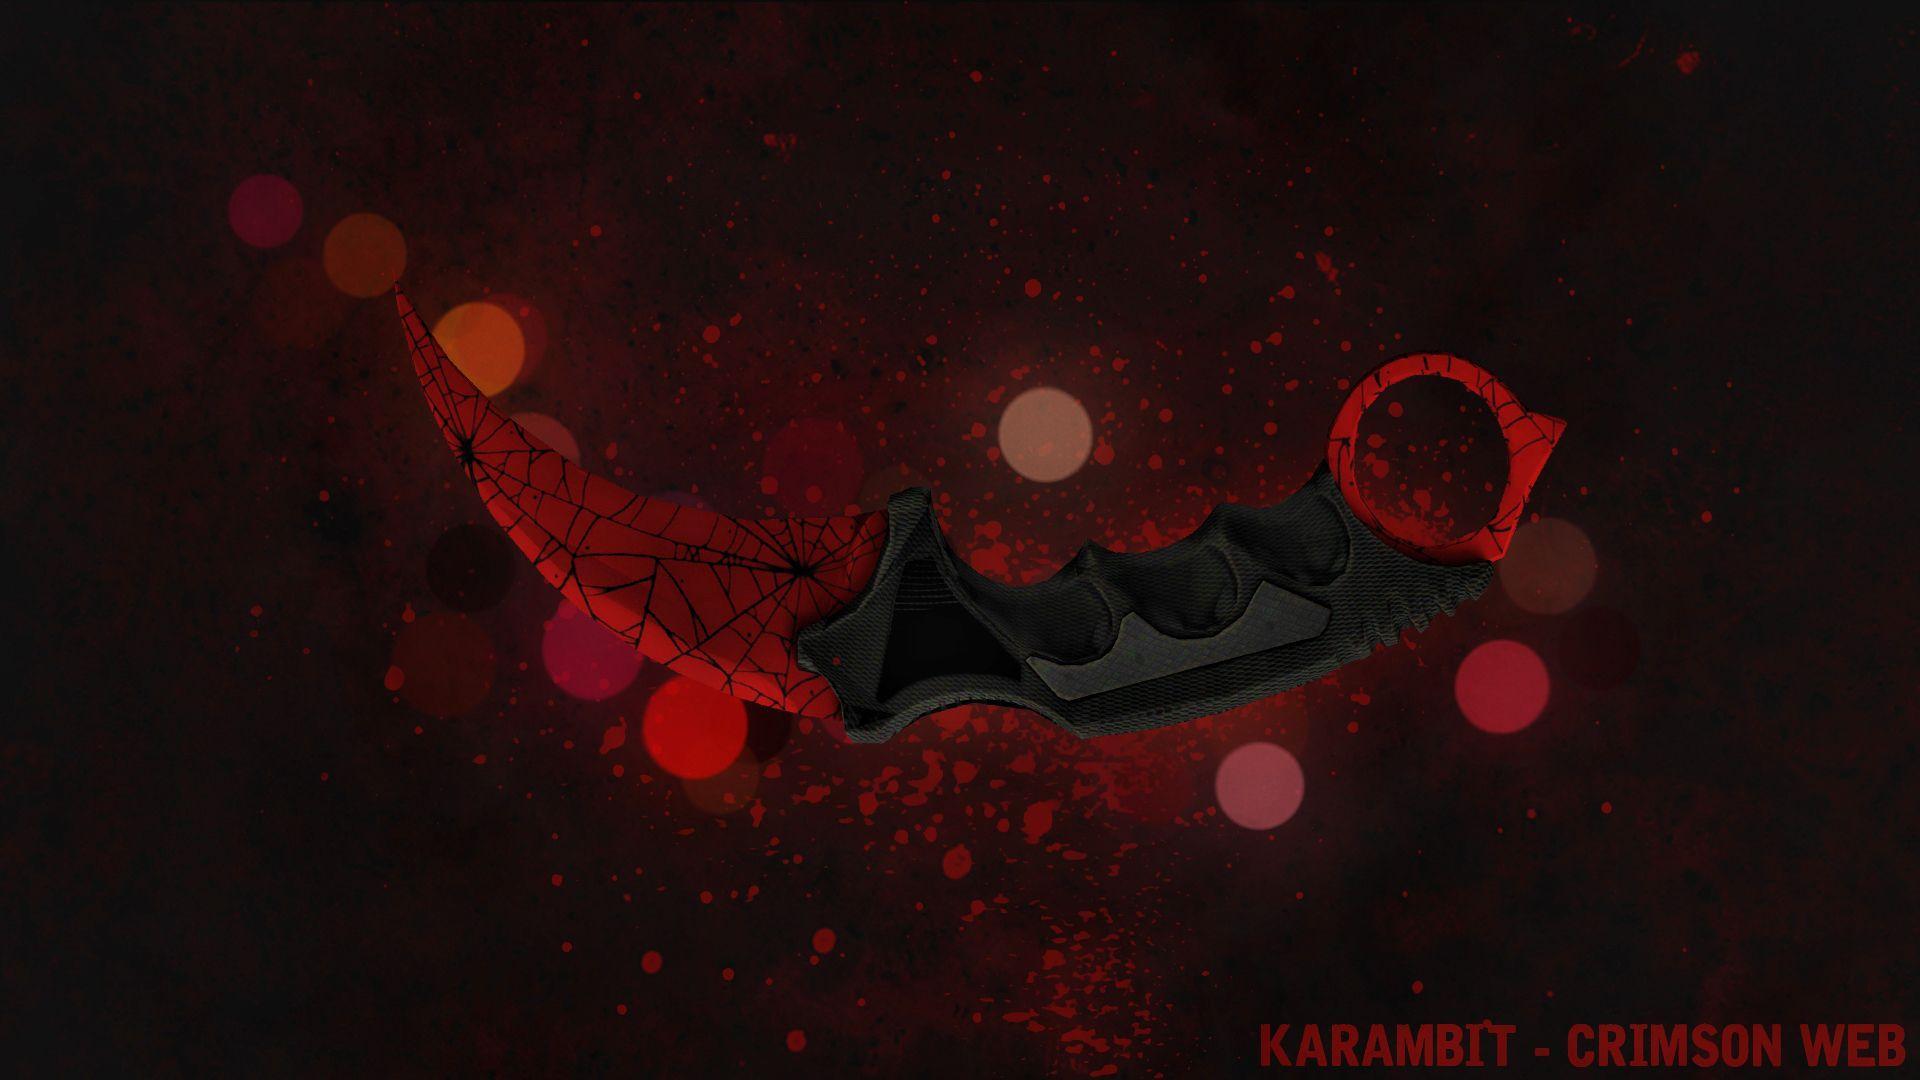 Karambit Crimson Web Wallpaper Image Photo Picture Background